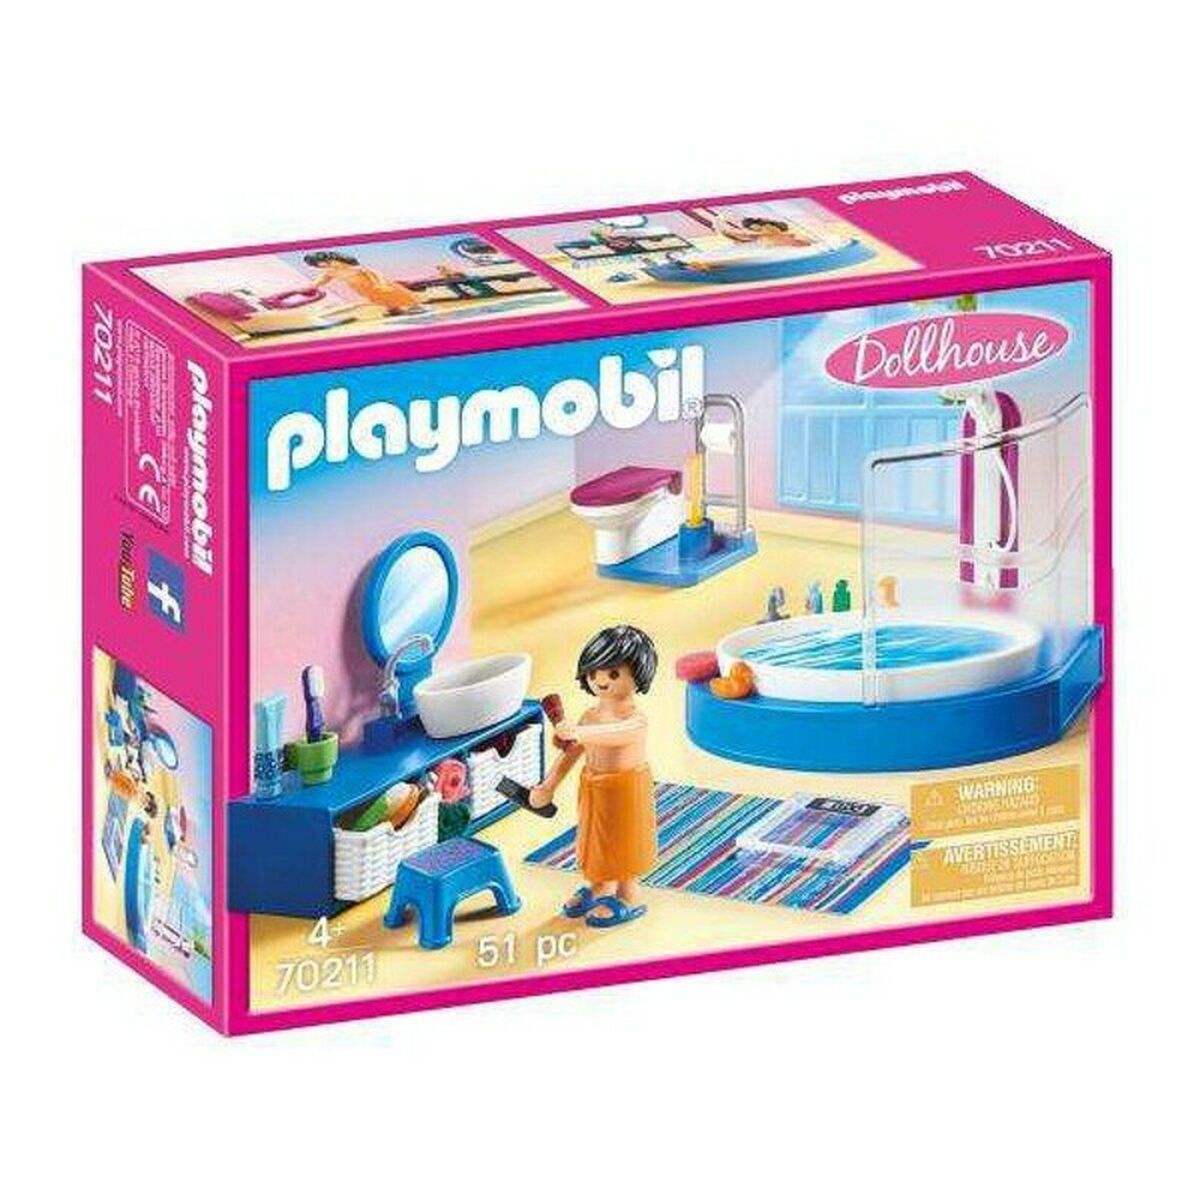 Dollhouse Bathroom Playmobil 70211 Salles de bains (51 pcs)